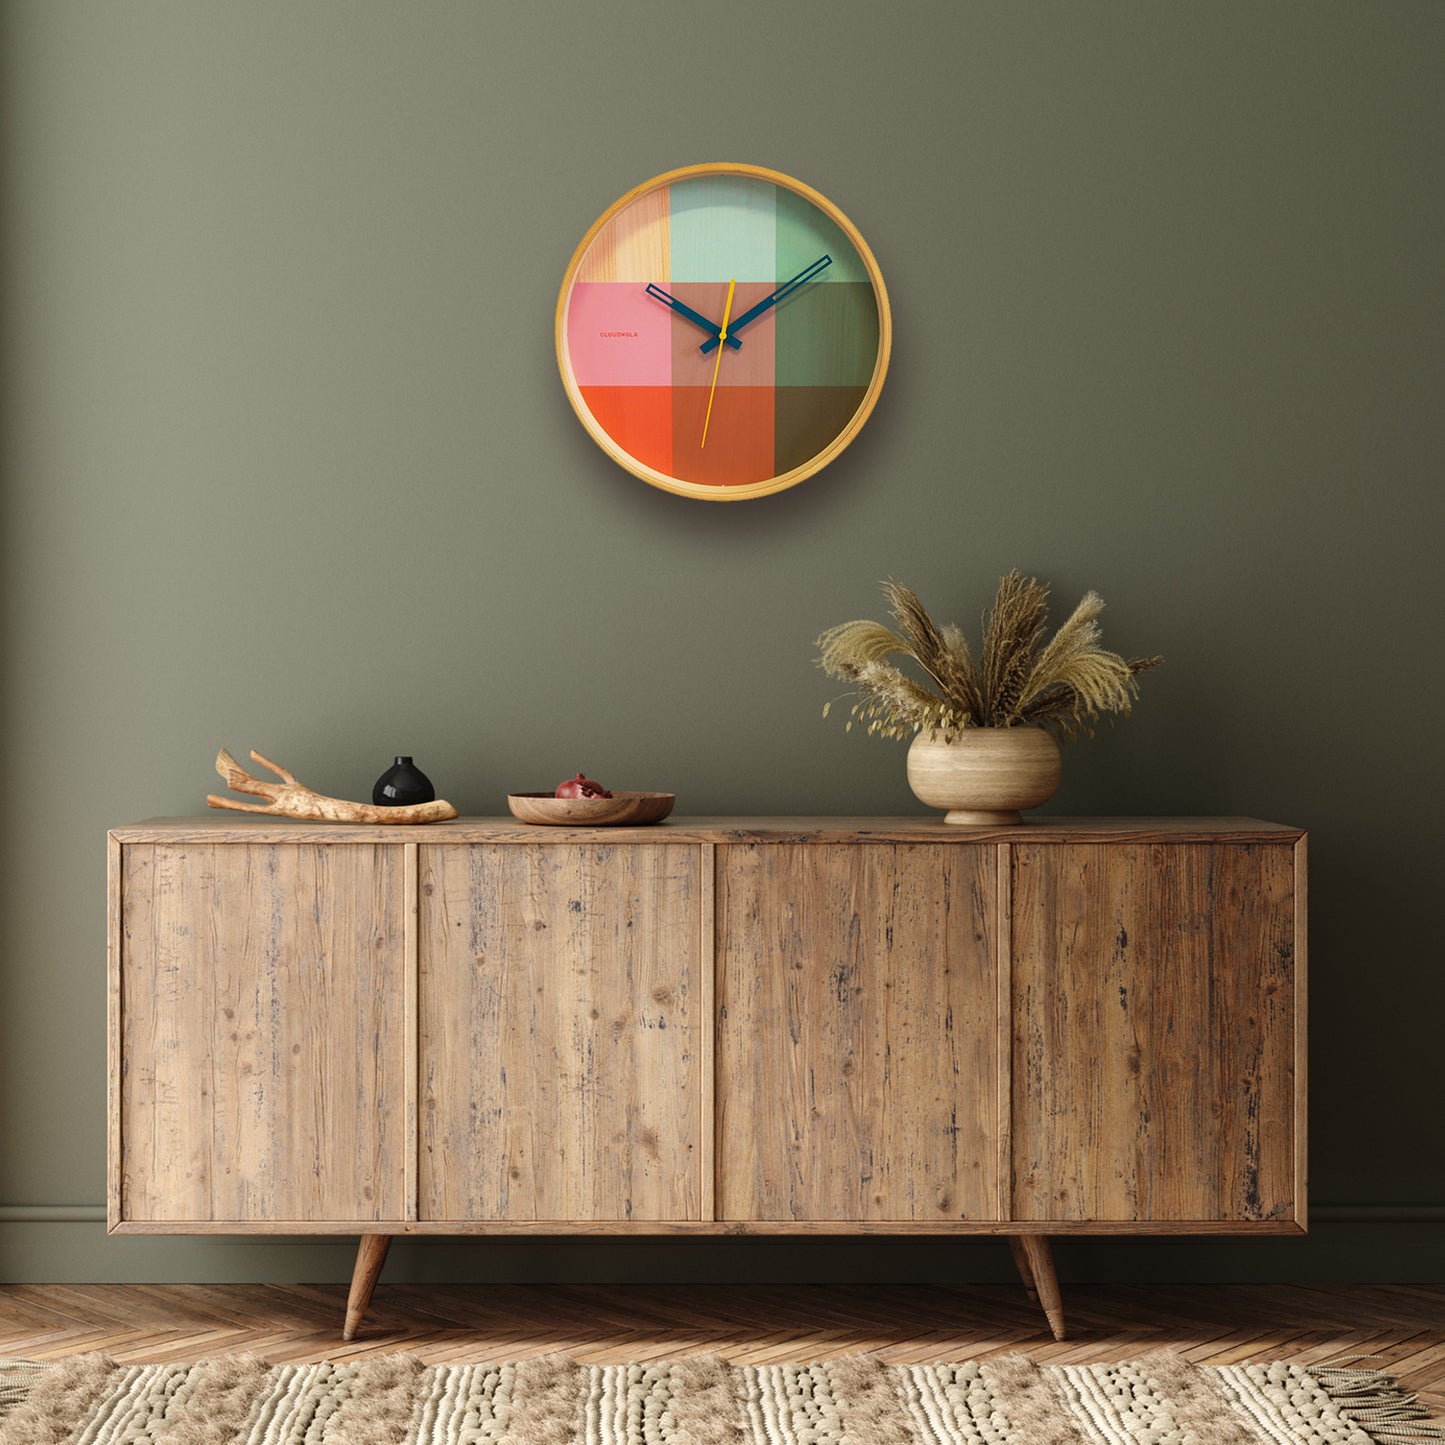 Riso Green & Pink Wall Clock - Wooden Casing - Artistic Timepiece